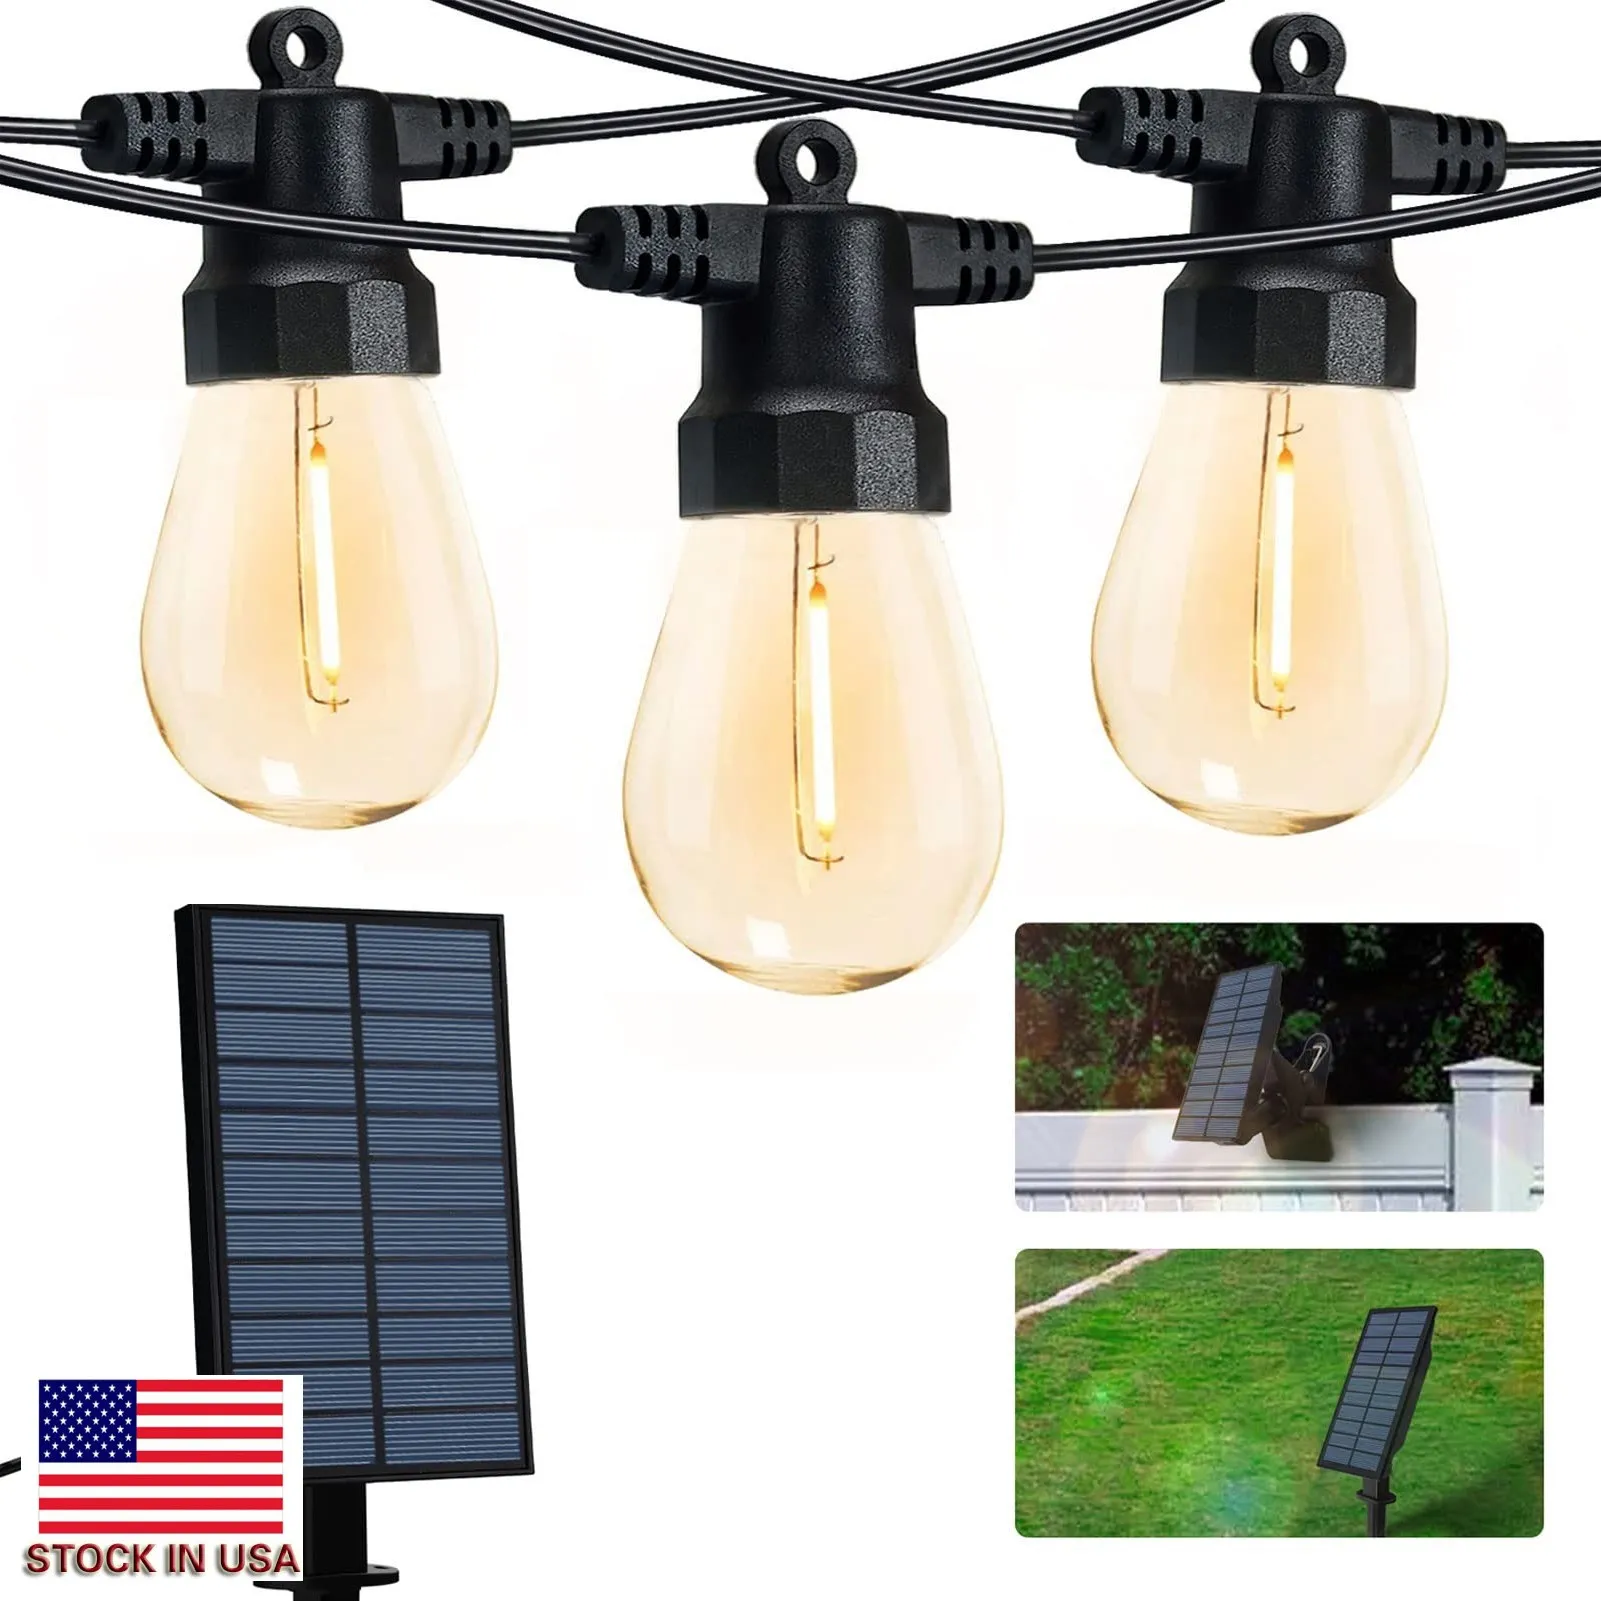 Solar Garden Lights S14 33ft Waterproof Outdoor String Lights Solars Powered & USB Charging Christmas Light